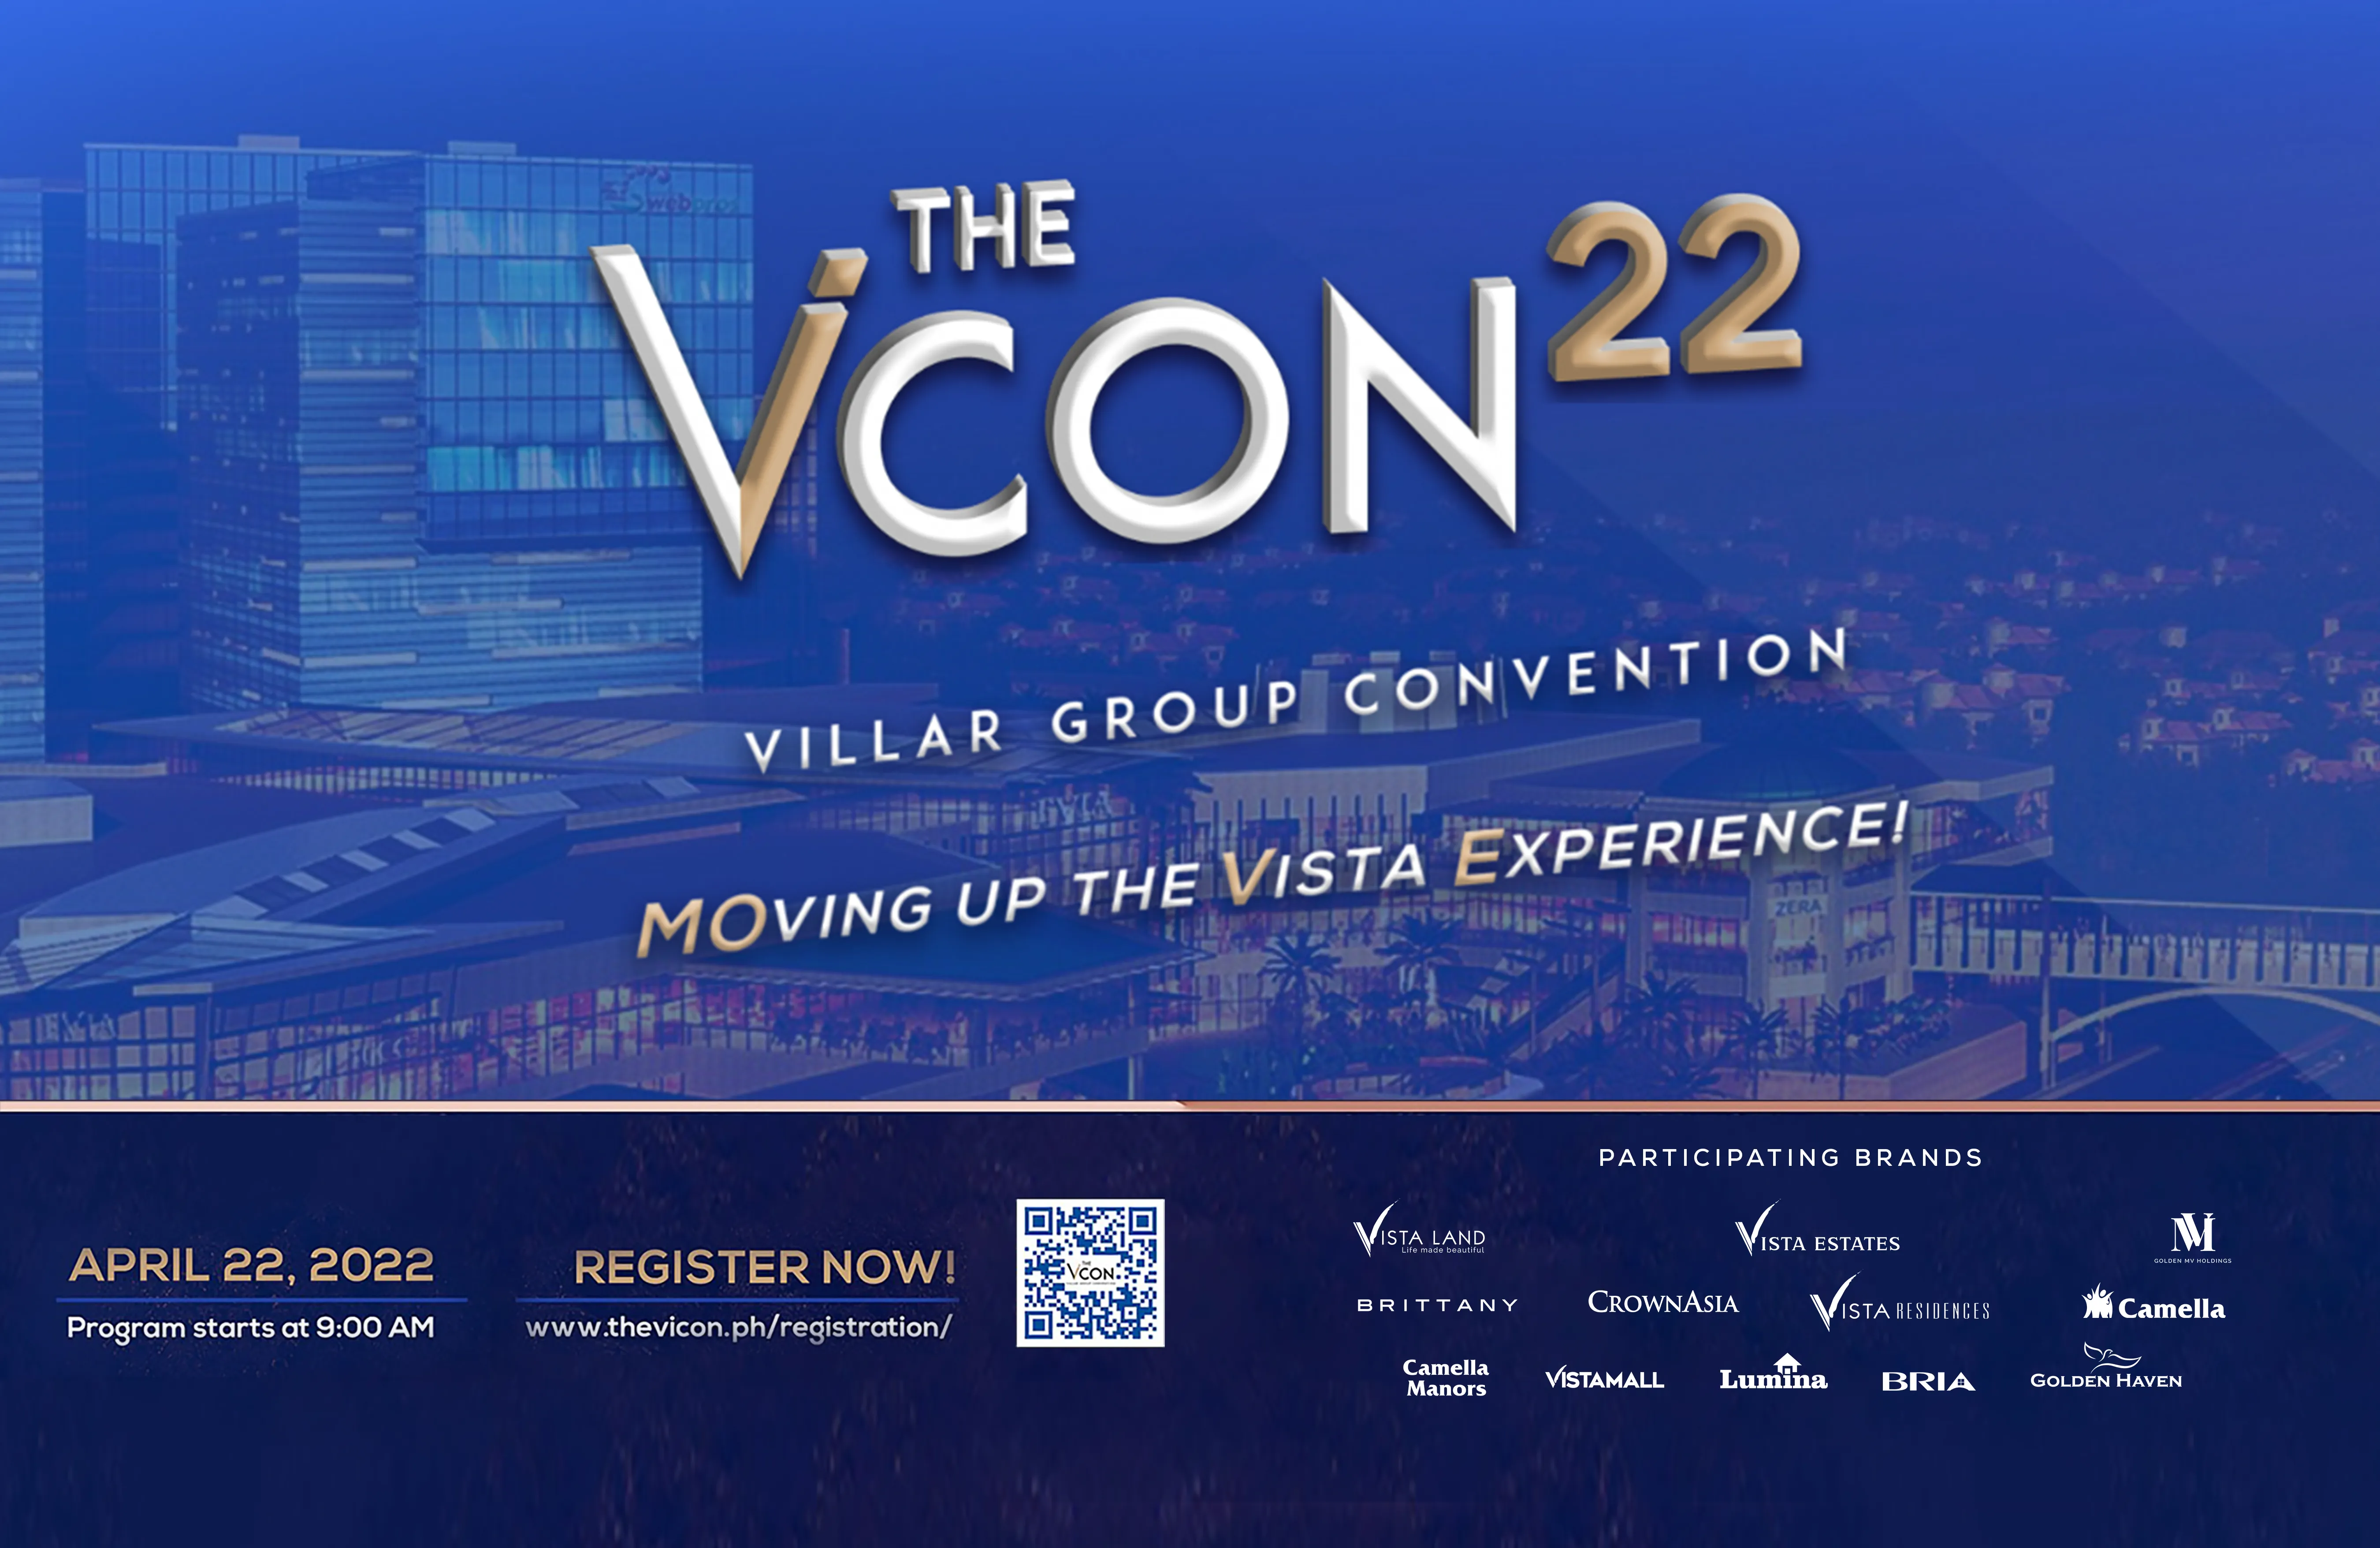 ViCon 2022 opens April 22 to unveil Vista Estates 3